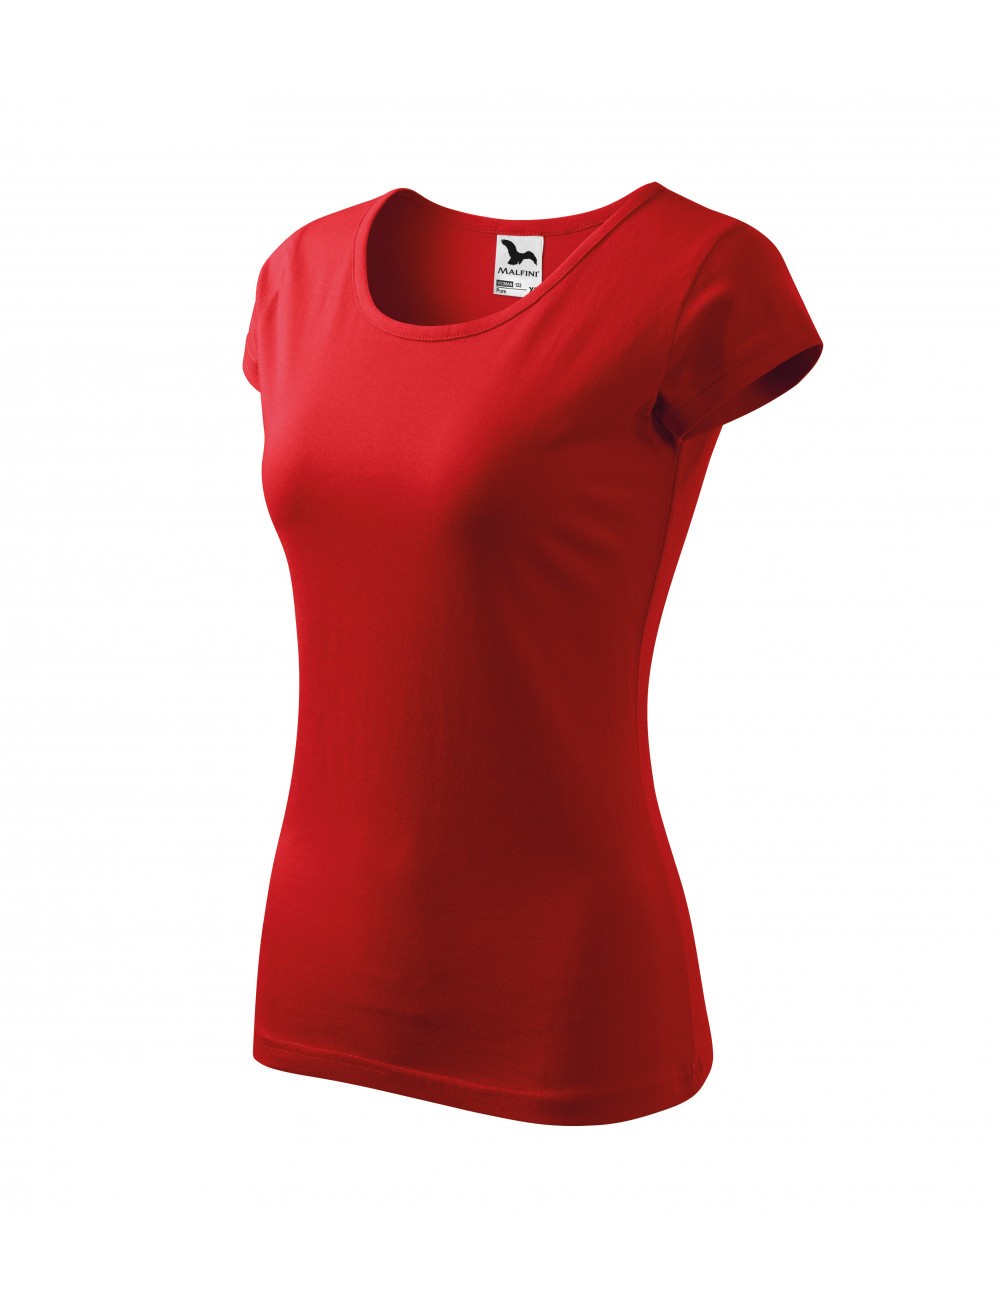 Women`s t-shirt pure 122 red Adler Malfini